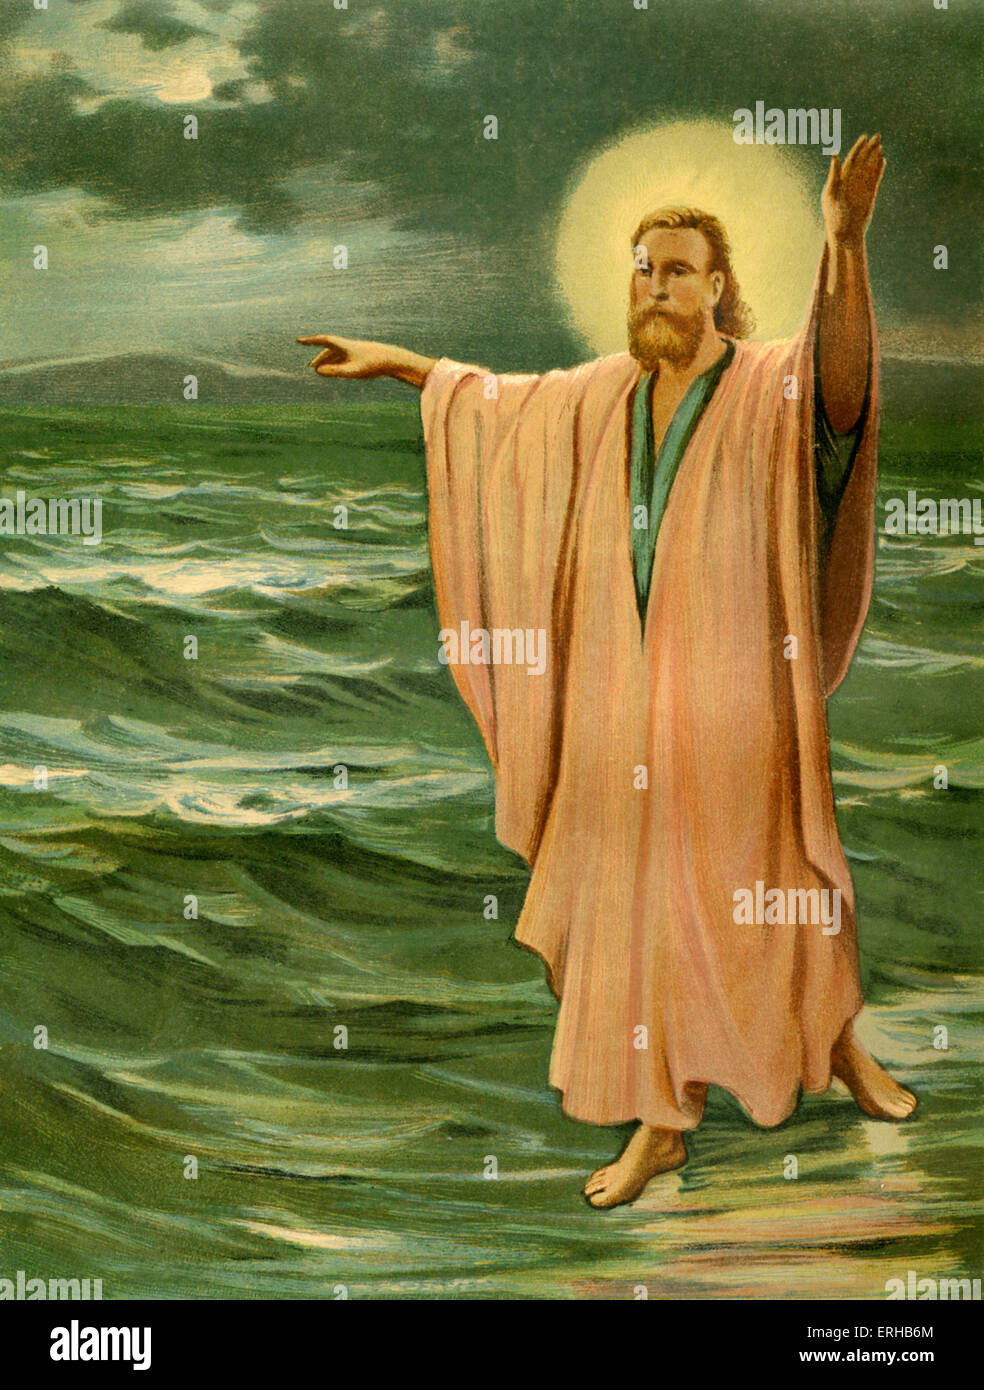 Jesus Christ performing one of his miracles - walking on Lake Galilee (Matthew 14:22-33, Mark 6:45-52, John 6:16-21). Stock Photo